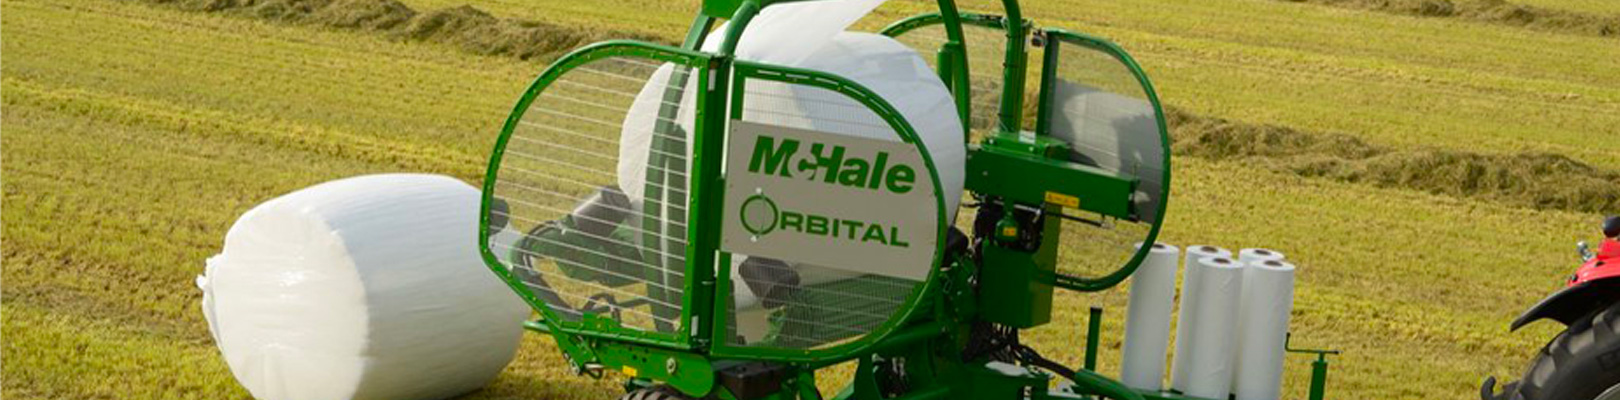 Balička McHale Orbital v akci